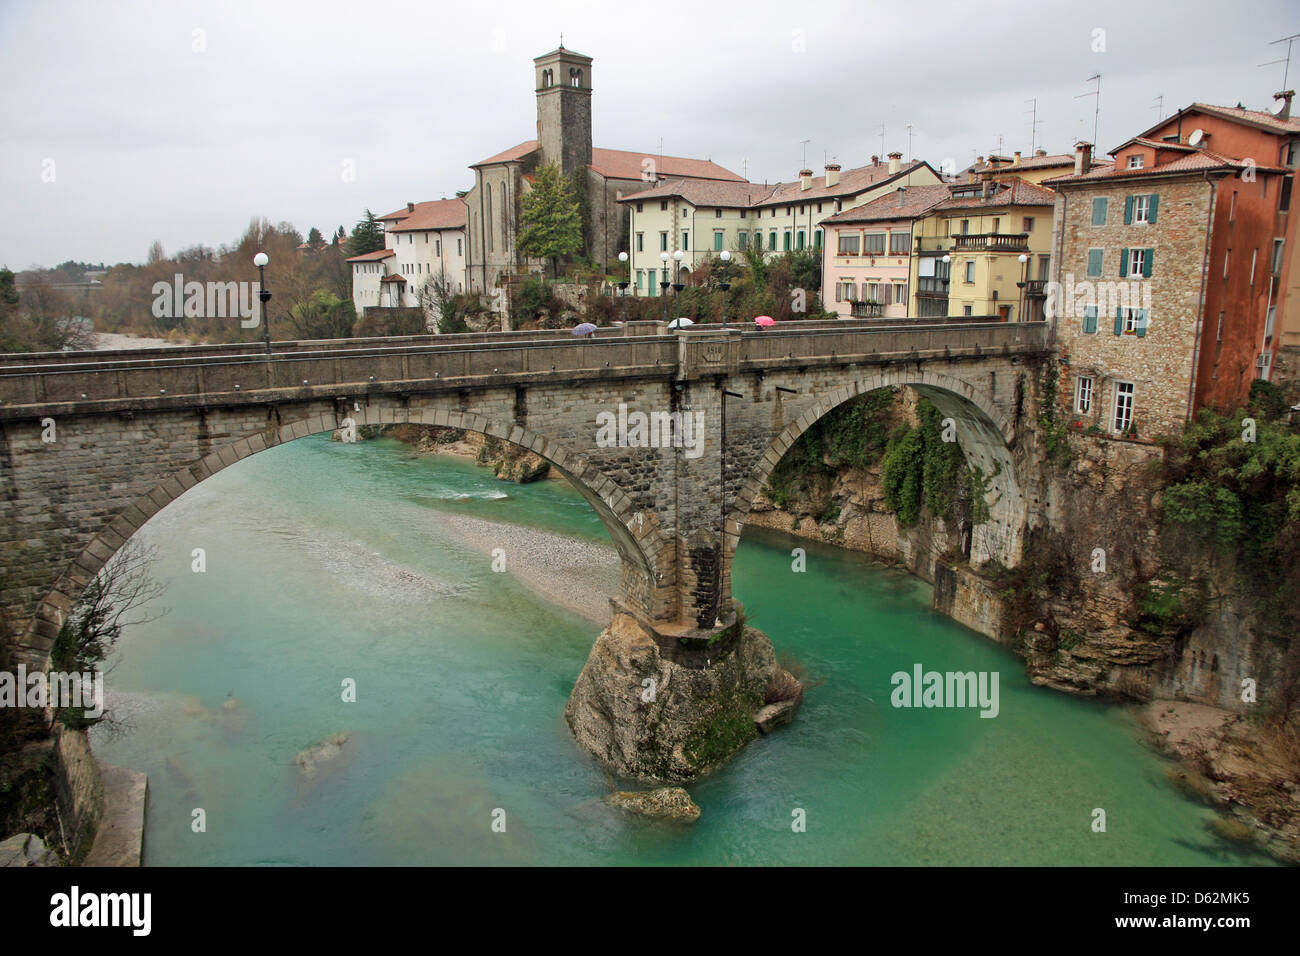 famous Devil's bridge on the NATISONE River that crosses the city of Cividale del friuli in Italy Stock Photo